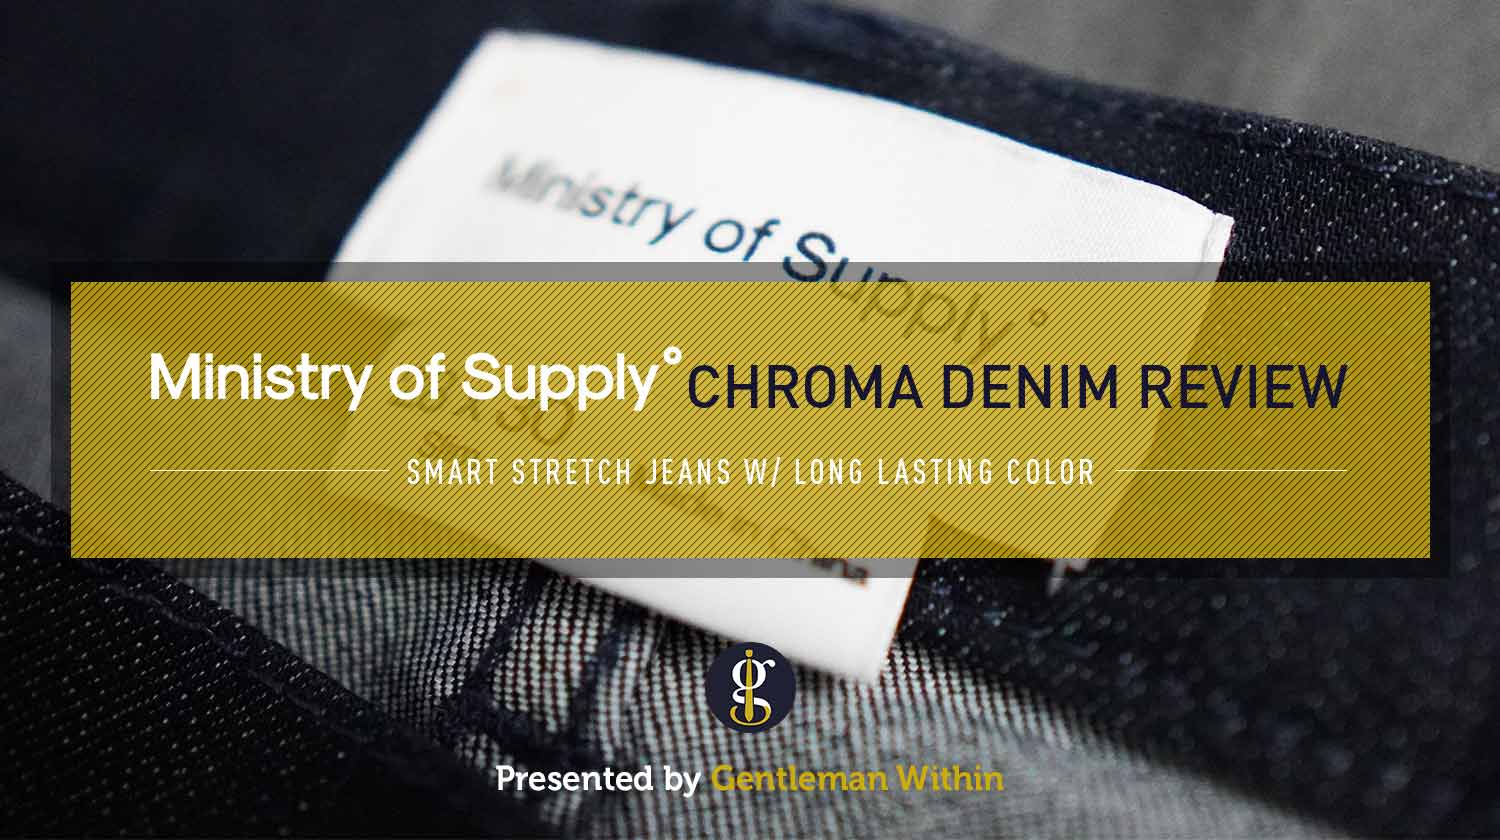 Ministry of Supply Chroma Denim Review: A Smarter Stretch Jean?